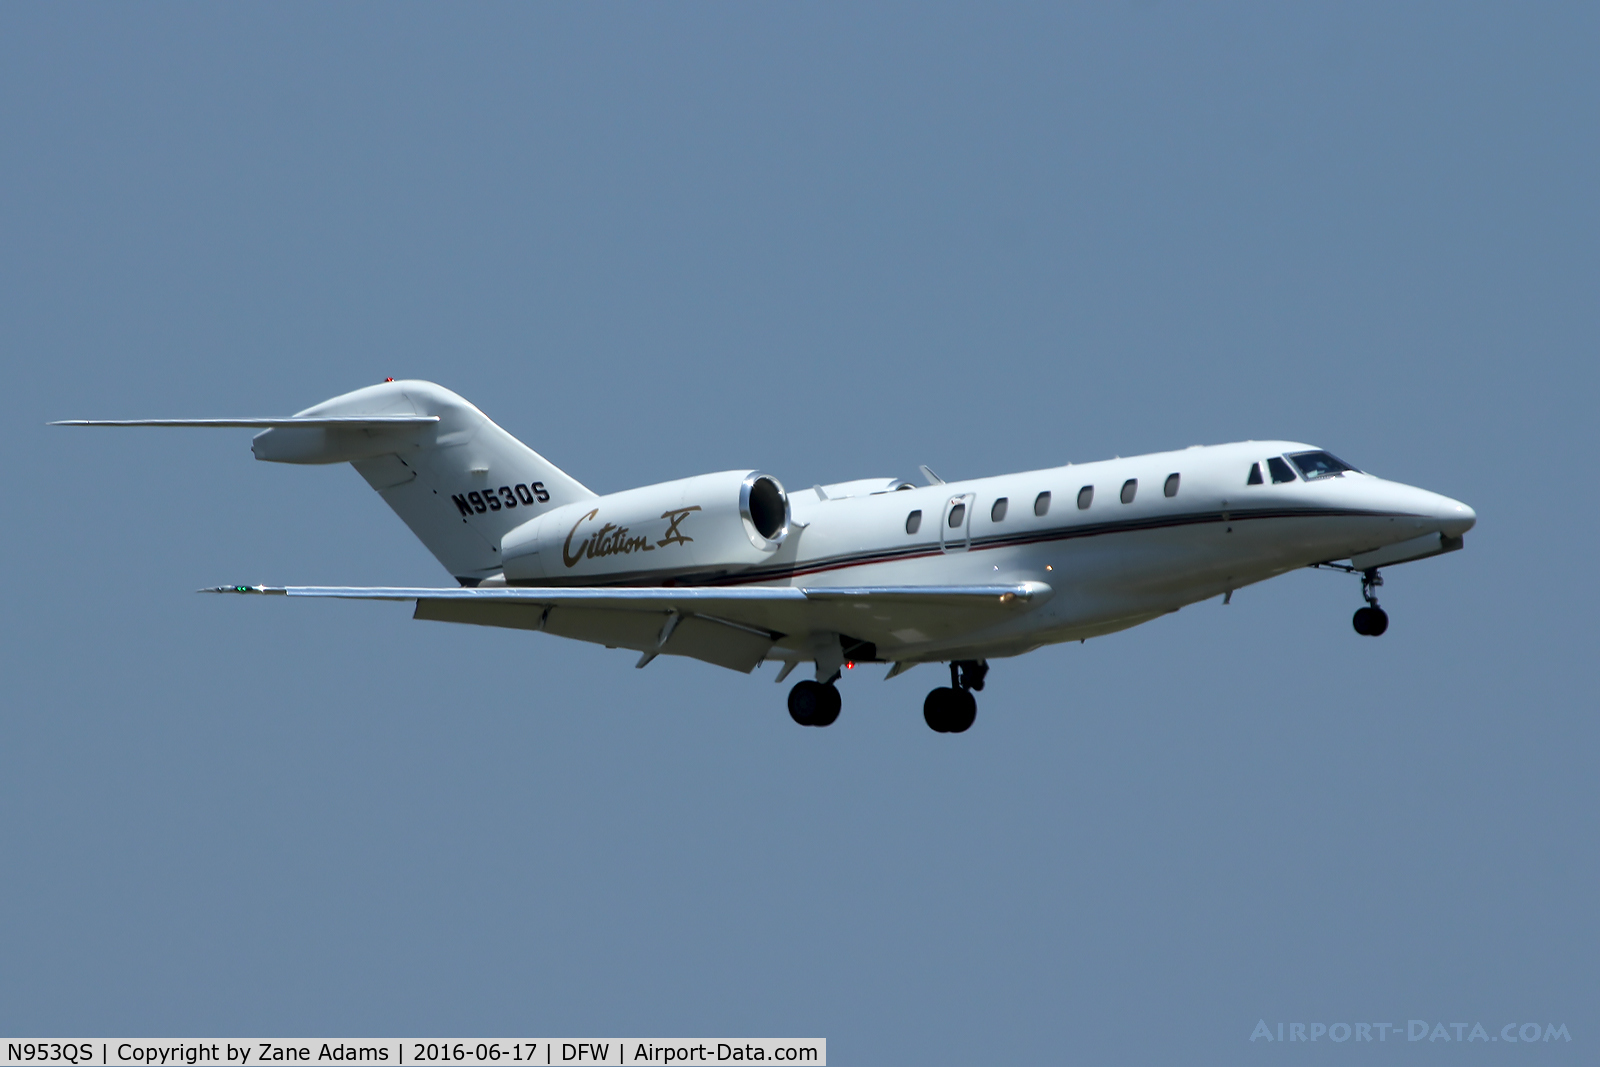 N953QS, 2001 Cessna 750 Citation X Citation X C/N 750-0153, Arriving at DFW Airport